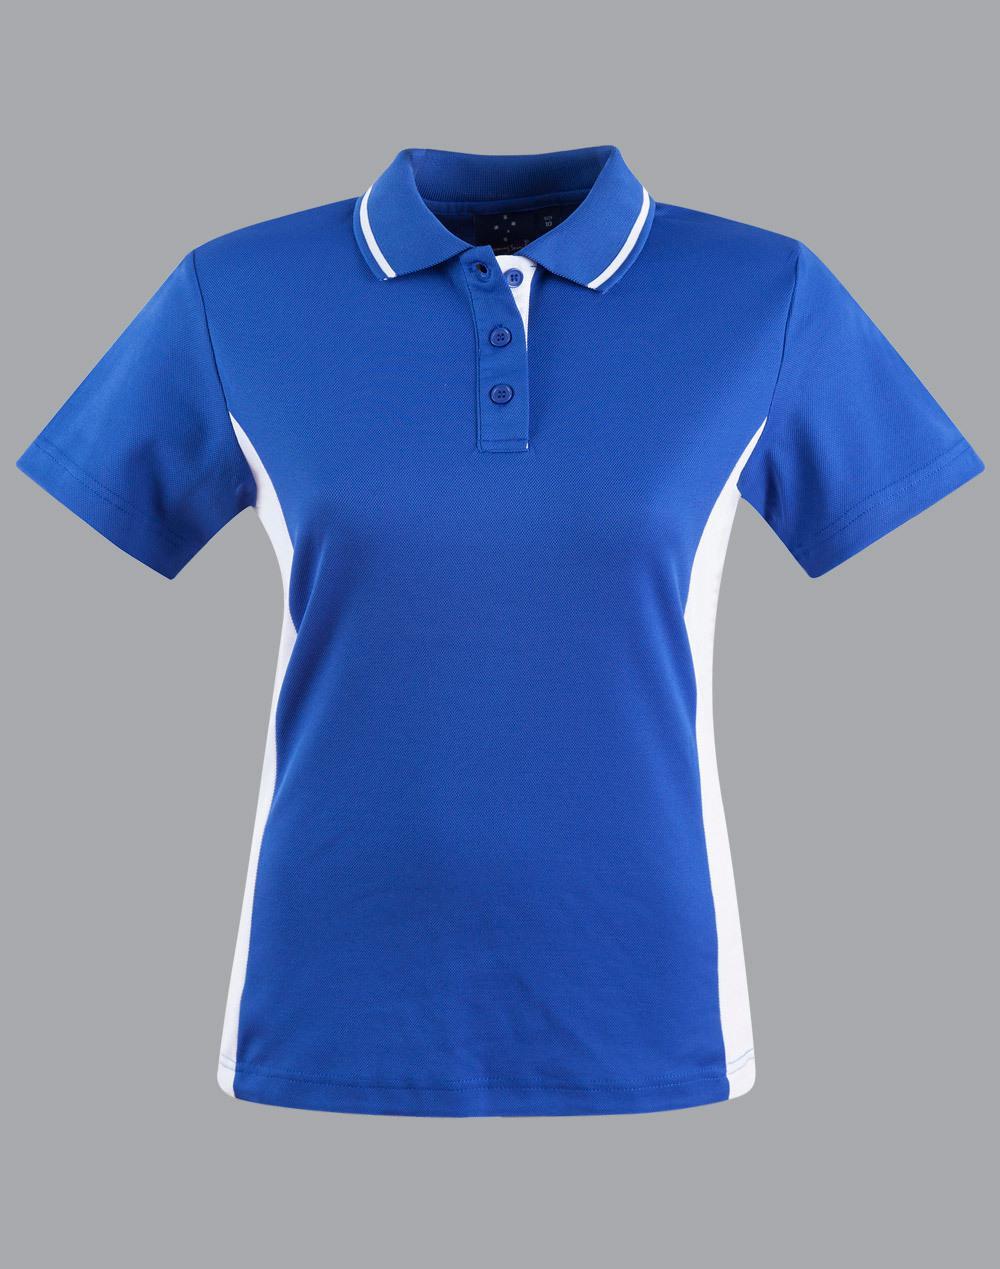 PS74 Sz 08 TEAMMATE Cotton Polyester Ladies Polo Shirt Royal Blue/White